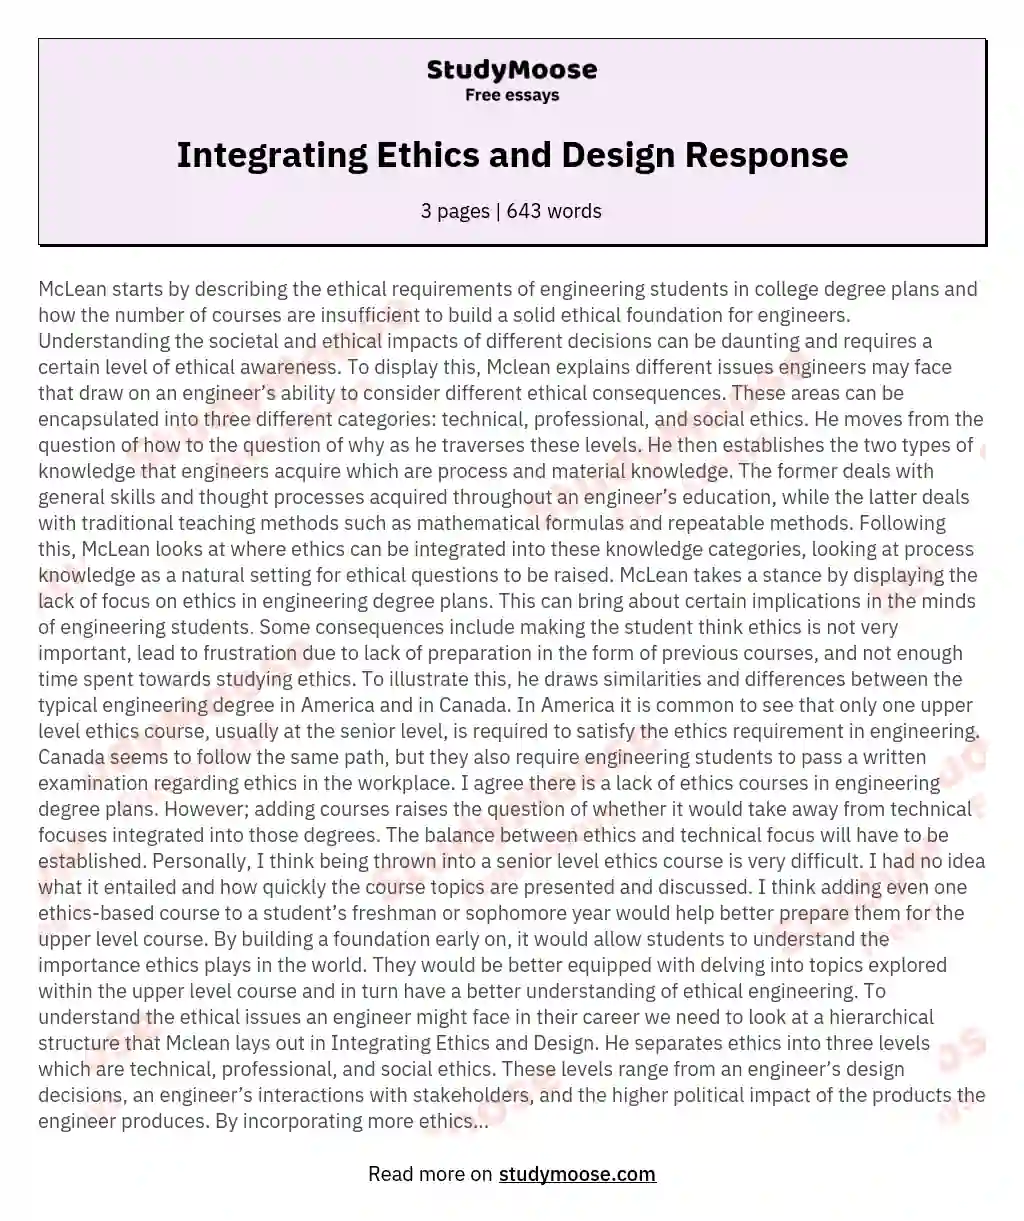 Integrating Ethics and Design Response essay